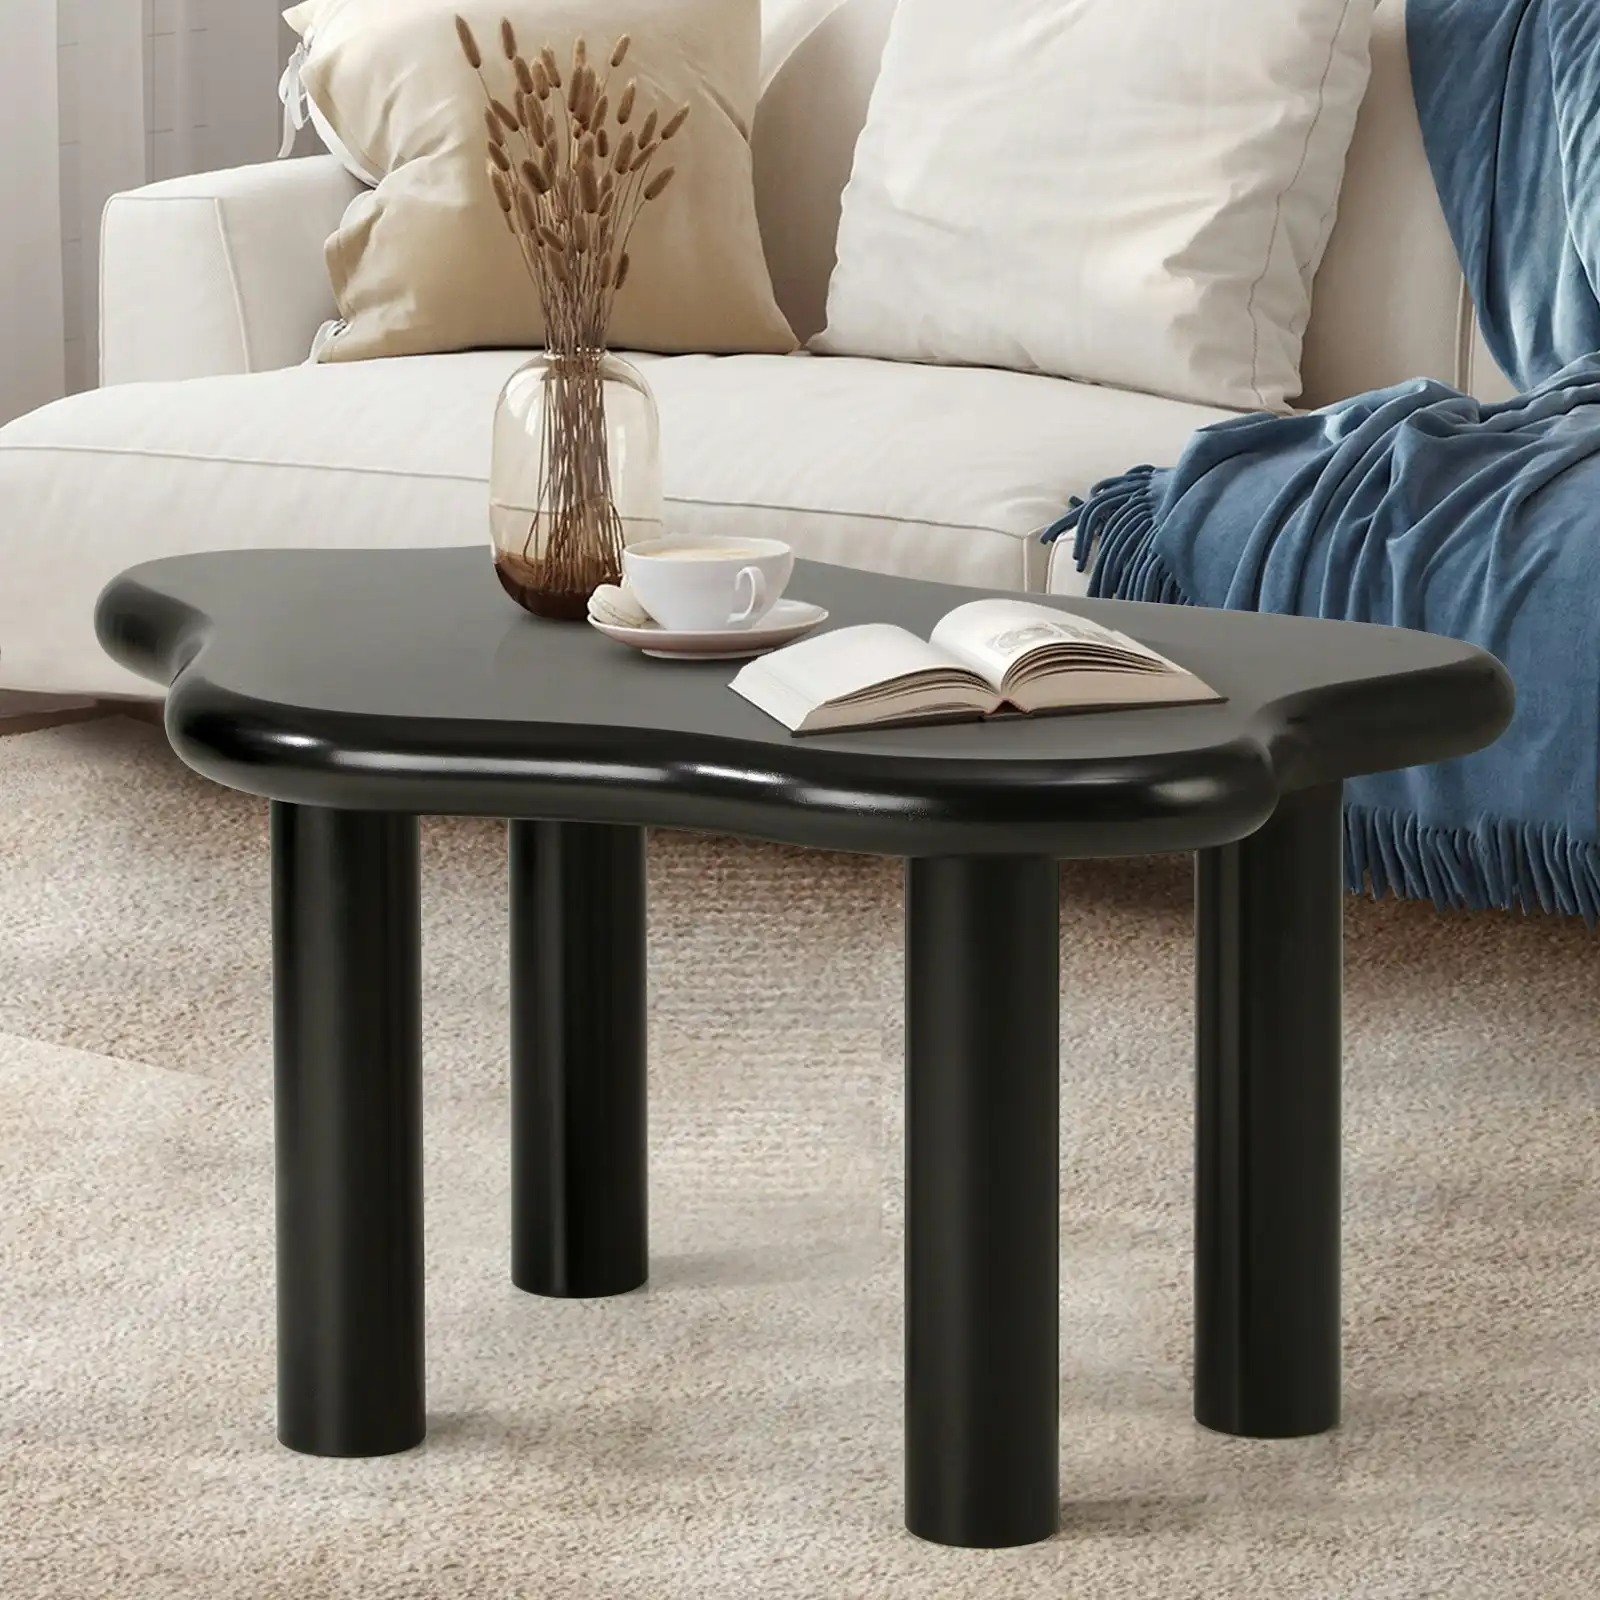 Oikiture Coffee Table Side Tables Sofa Cafe Black Irregular